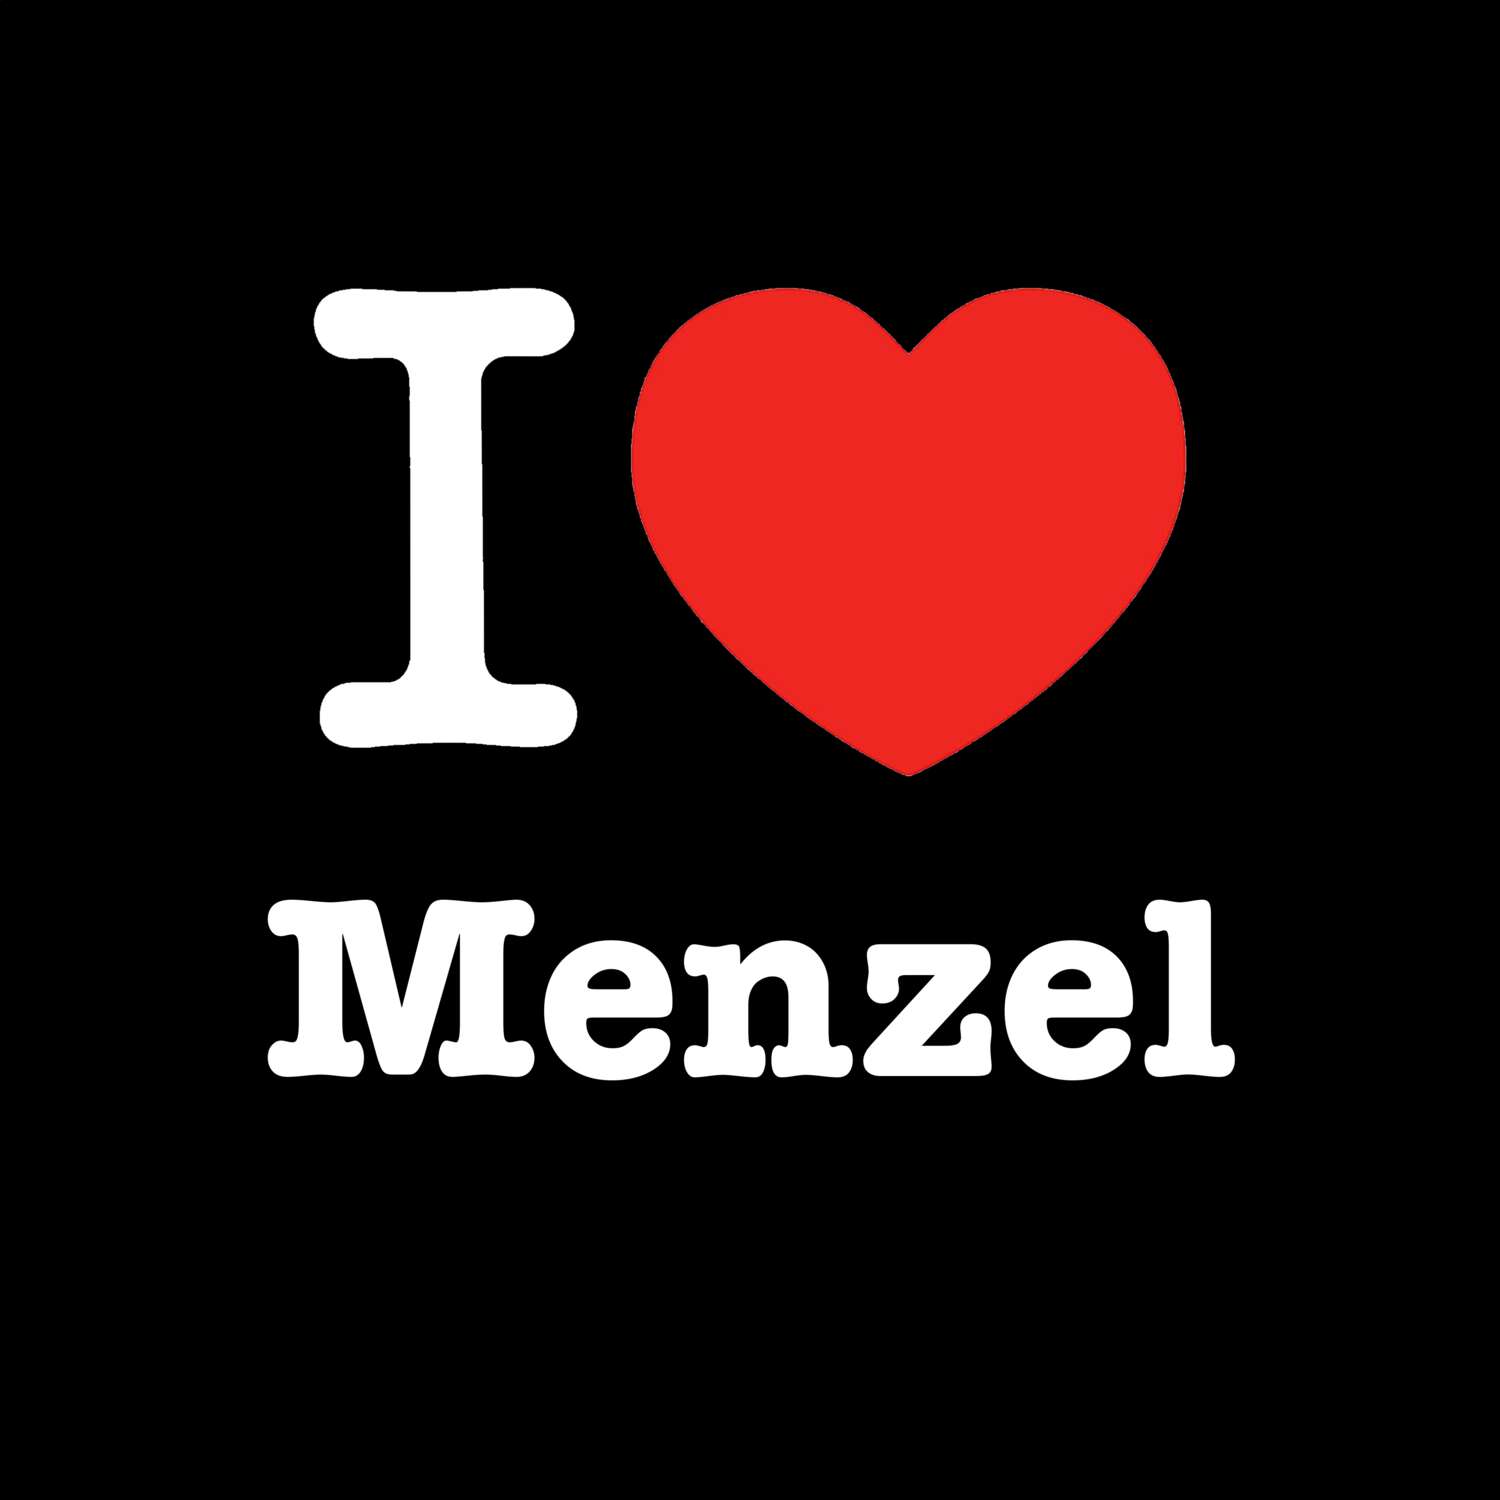 Menzel T-Shirt »I love«